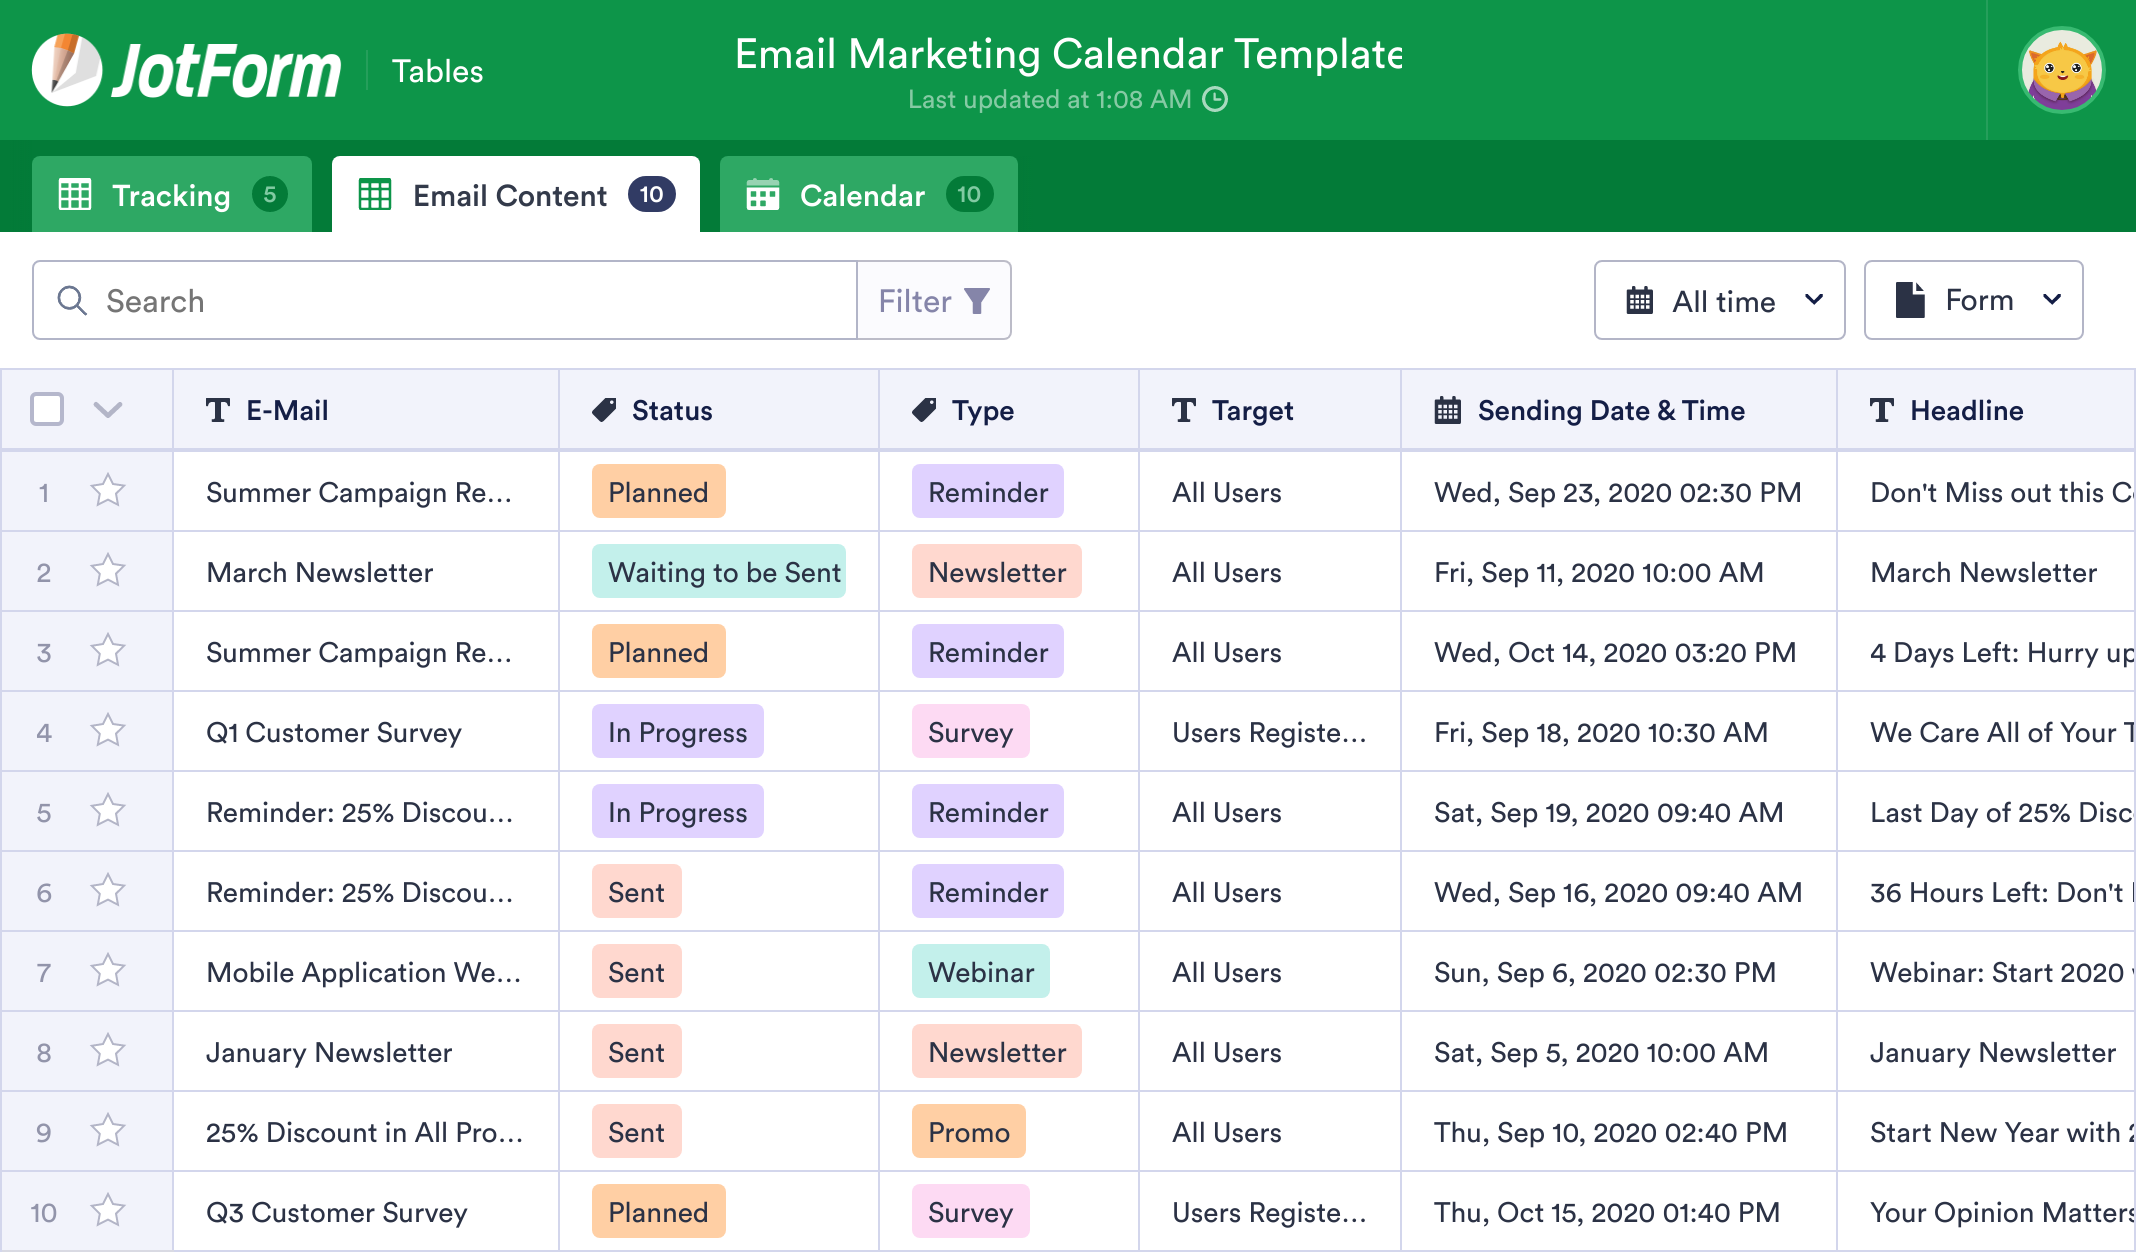 Email Marketing Calendar Template | JotForm Tables